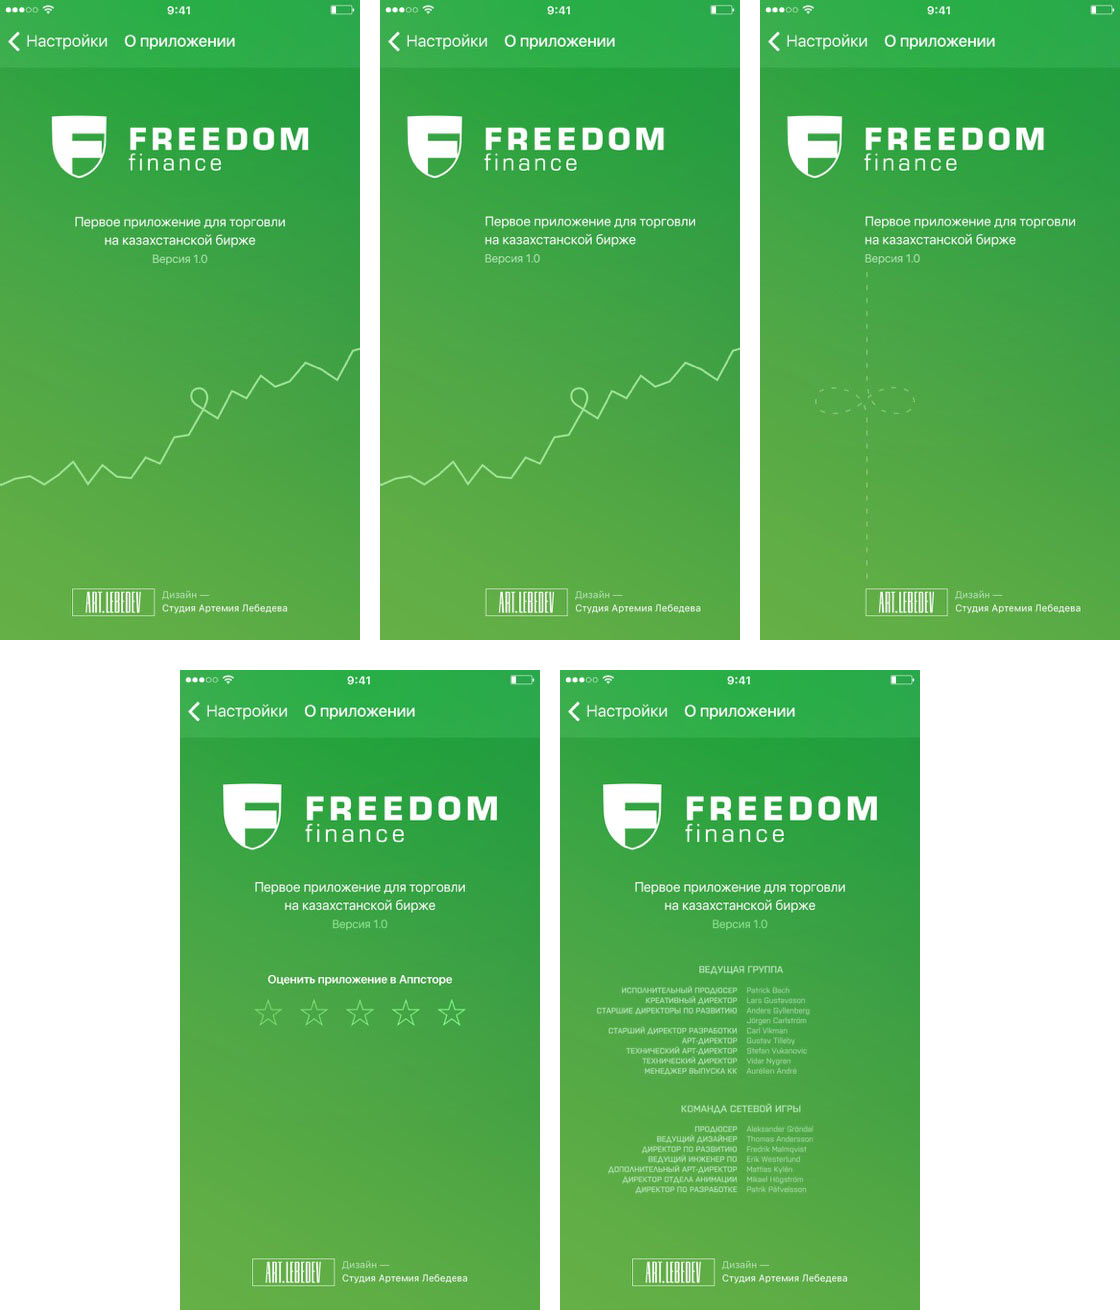 freedom finance process 32